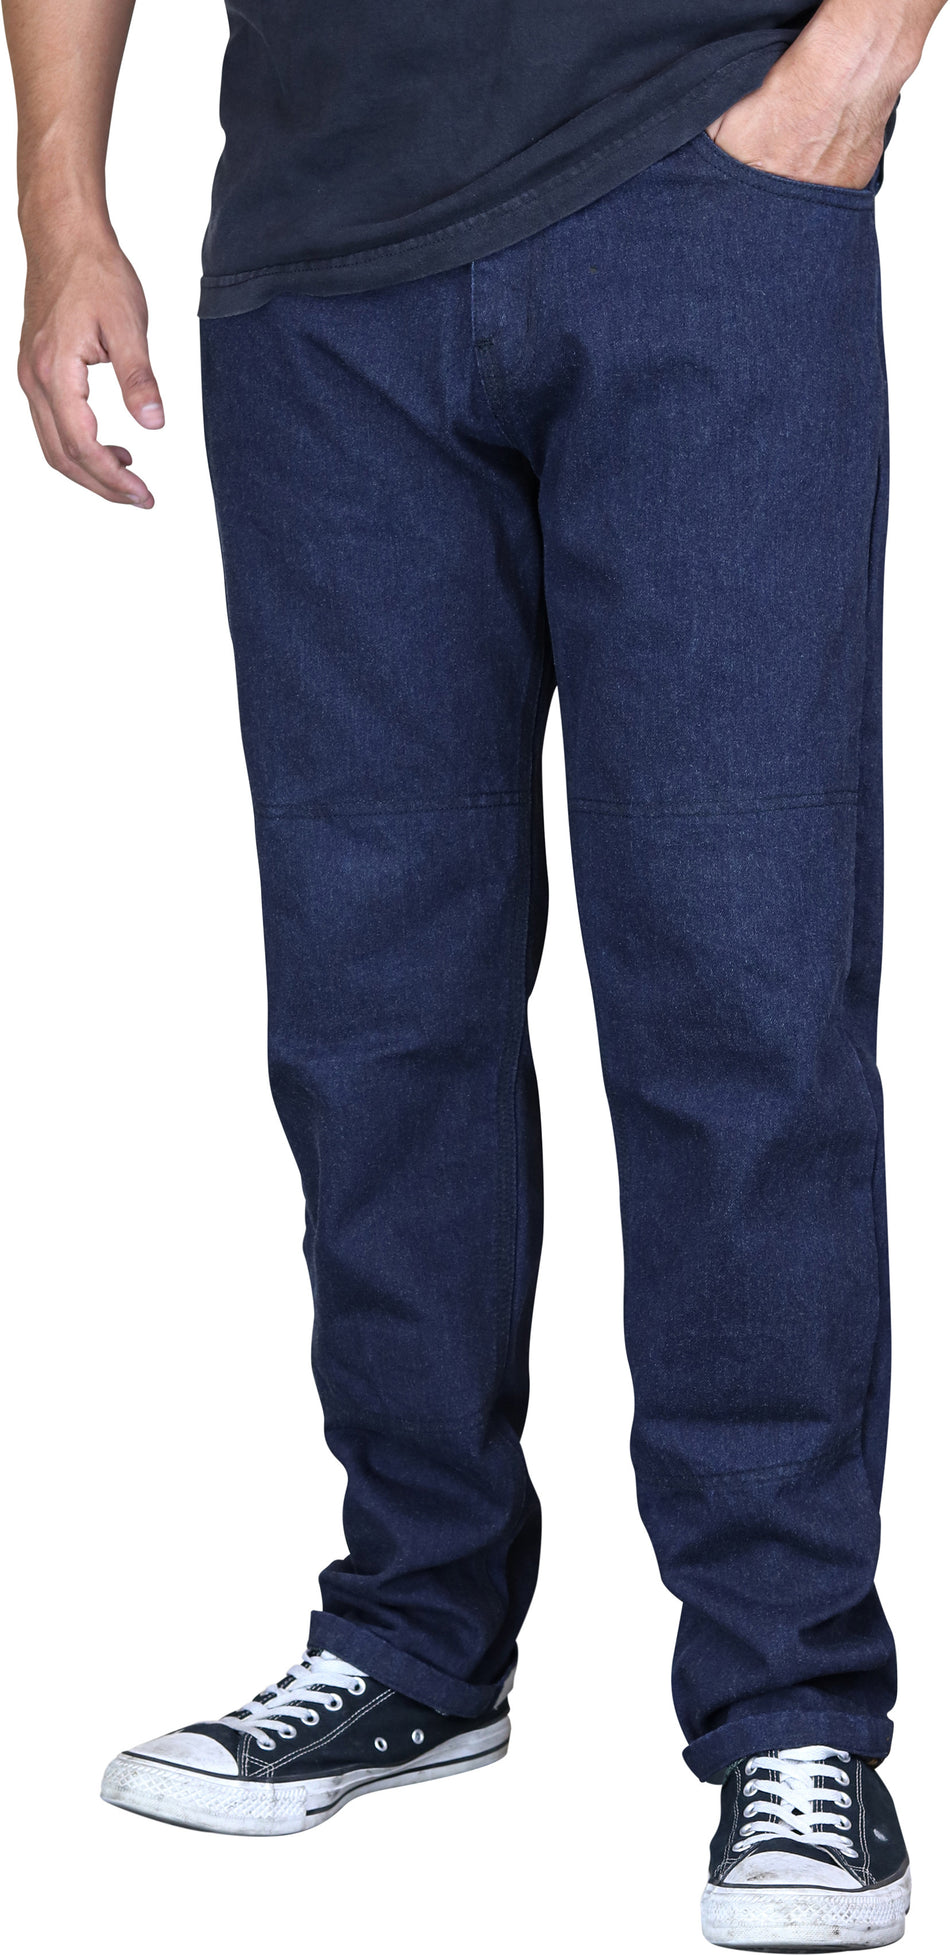 SCORPION EXO Covert Ultra Jeans Blue Size 38 4402-38